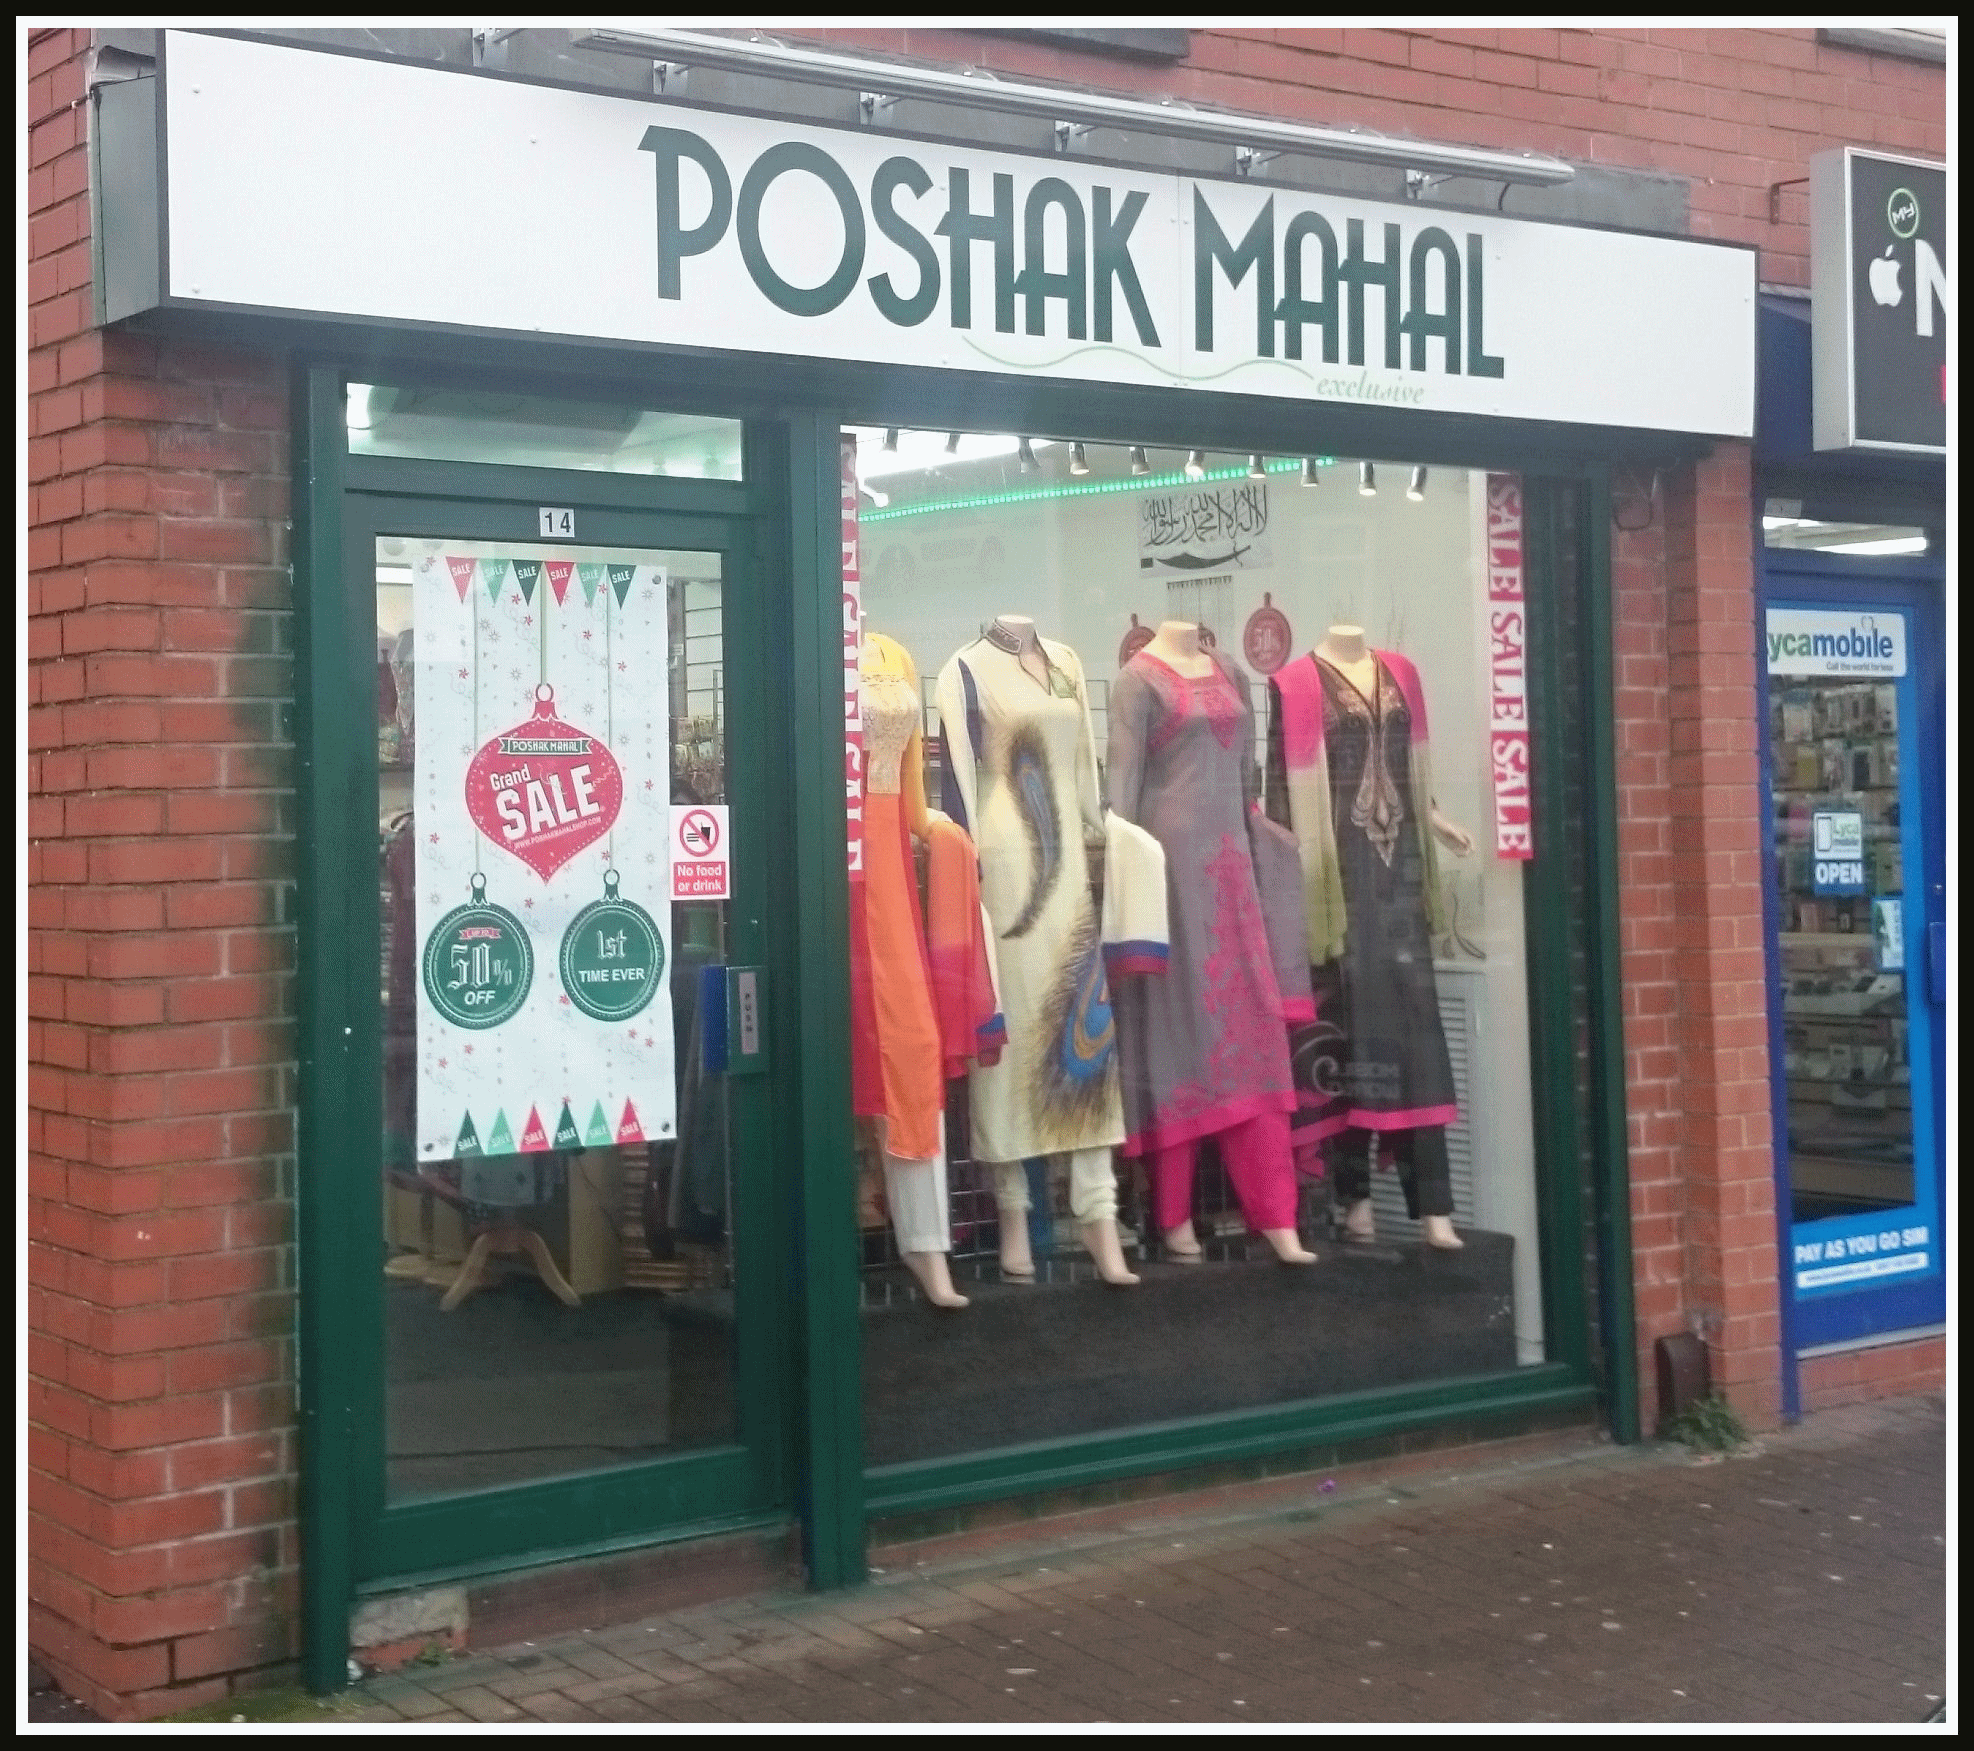 Poshak Mahal, 14 St Helens Road, Bolton, BL3